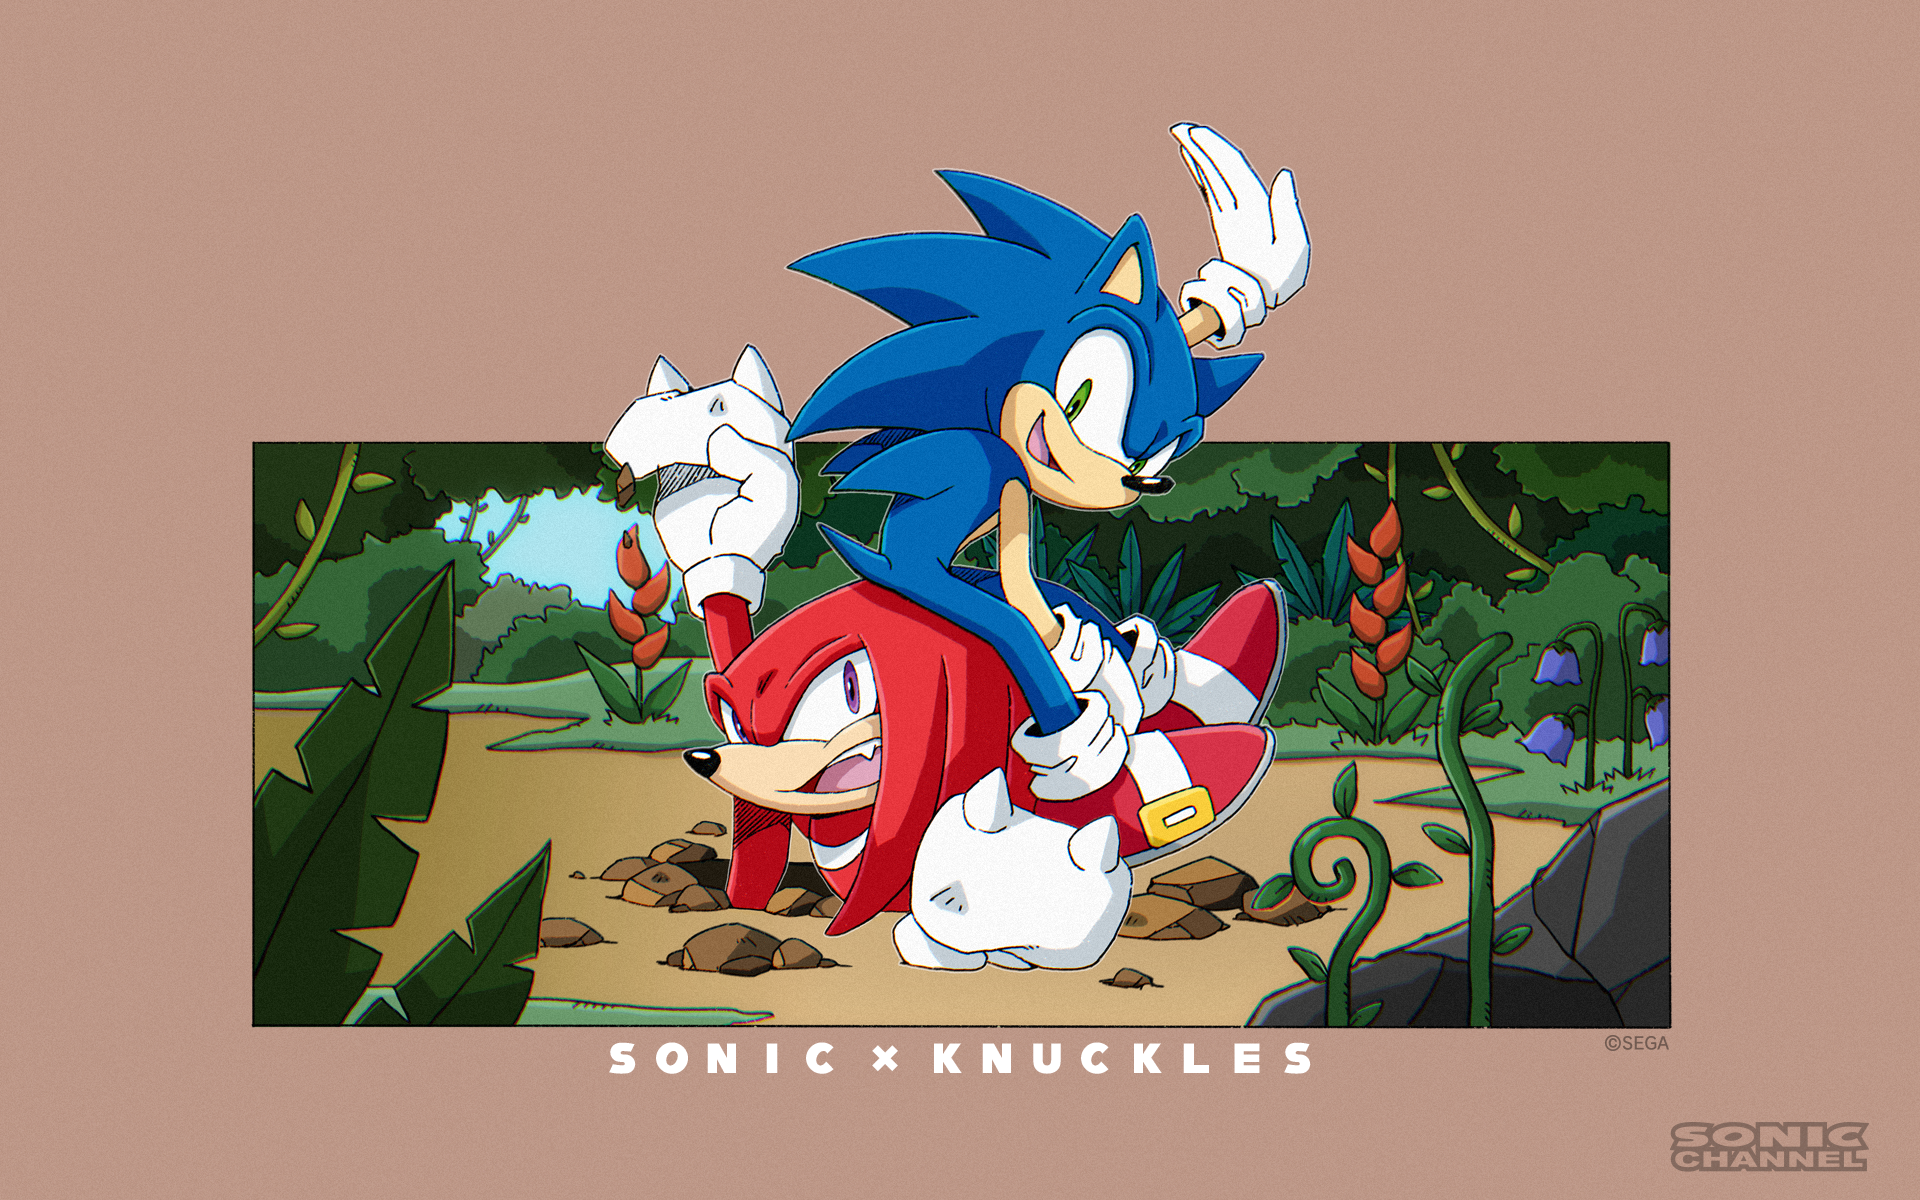 New Official Artwork for February 2021 Focuses On Sonic & Knuckles Sonic Stadium